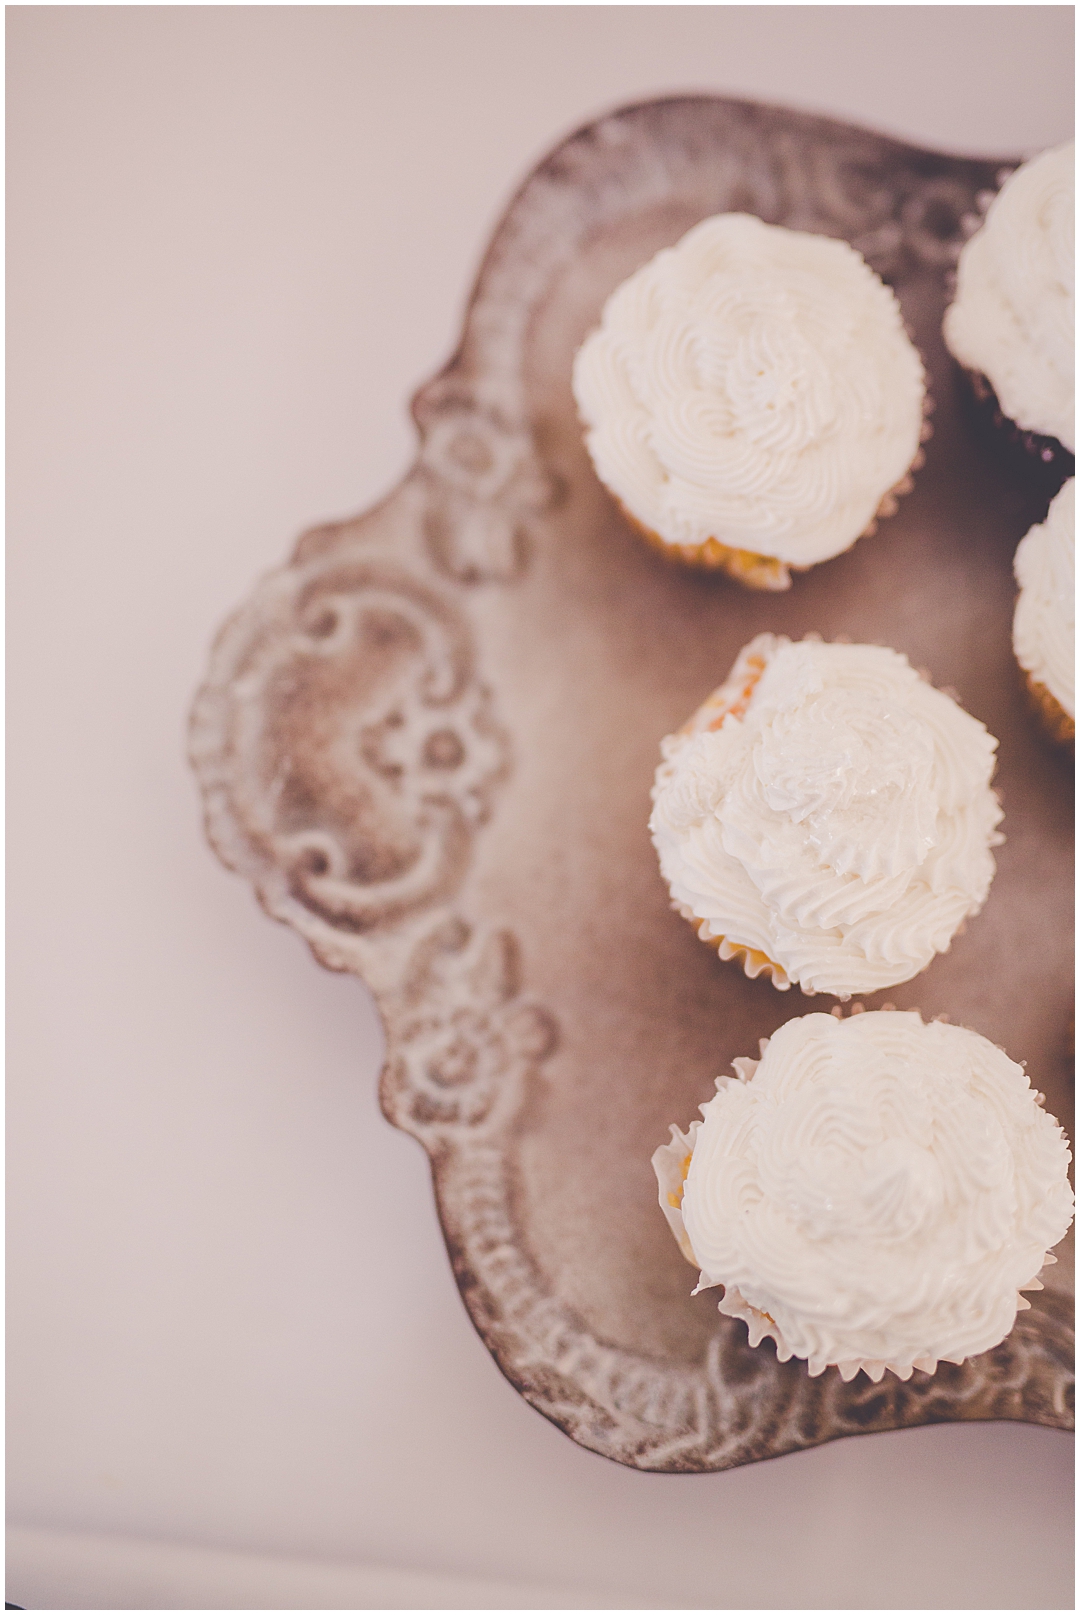 Kara Evans Photographer - Wedding Wednesday - Wedding Blogger - Cake vs. Cupcakes